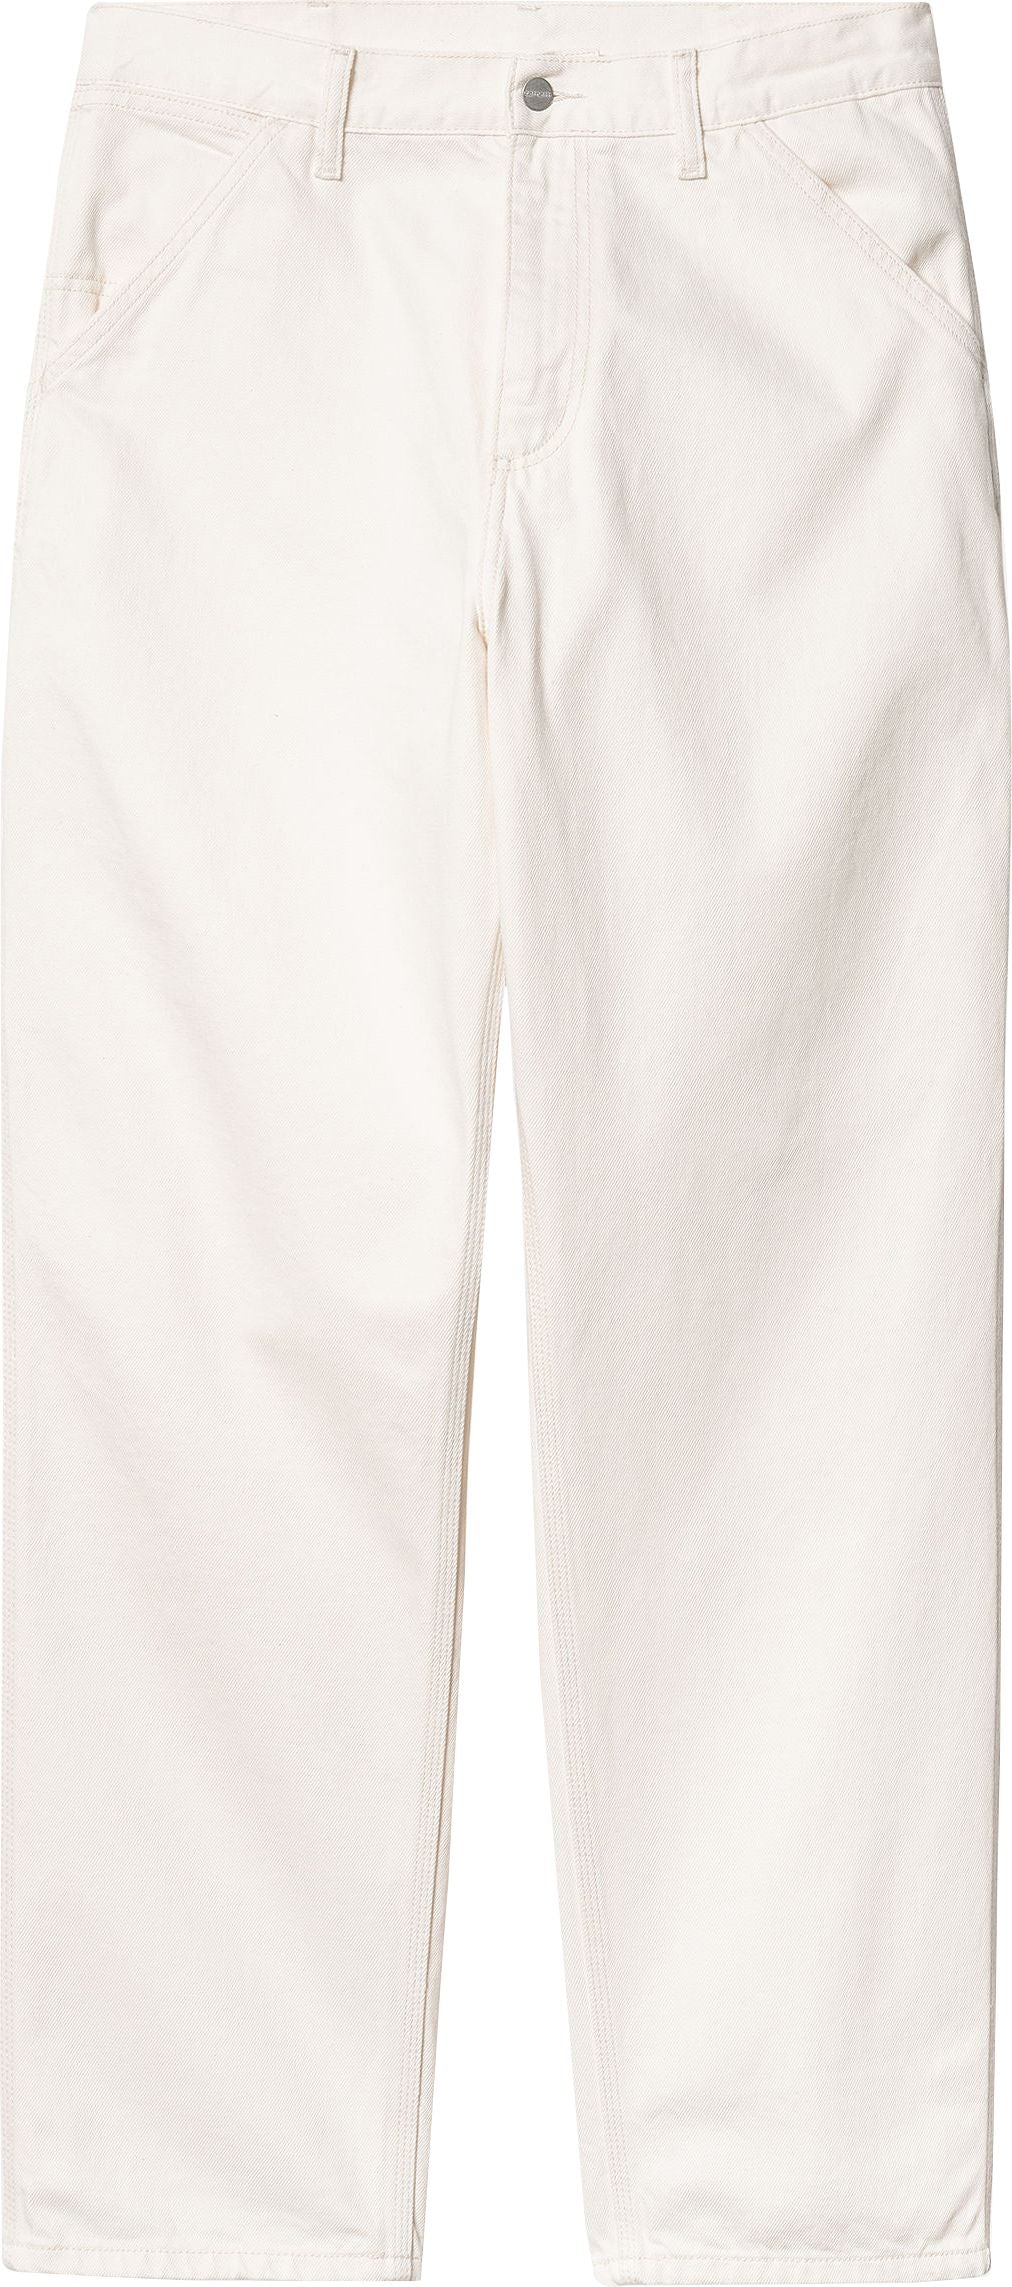  Carhartt Wip Jeans Single Knee Pant White Rinsed Bianco Uomo - 2